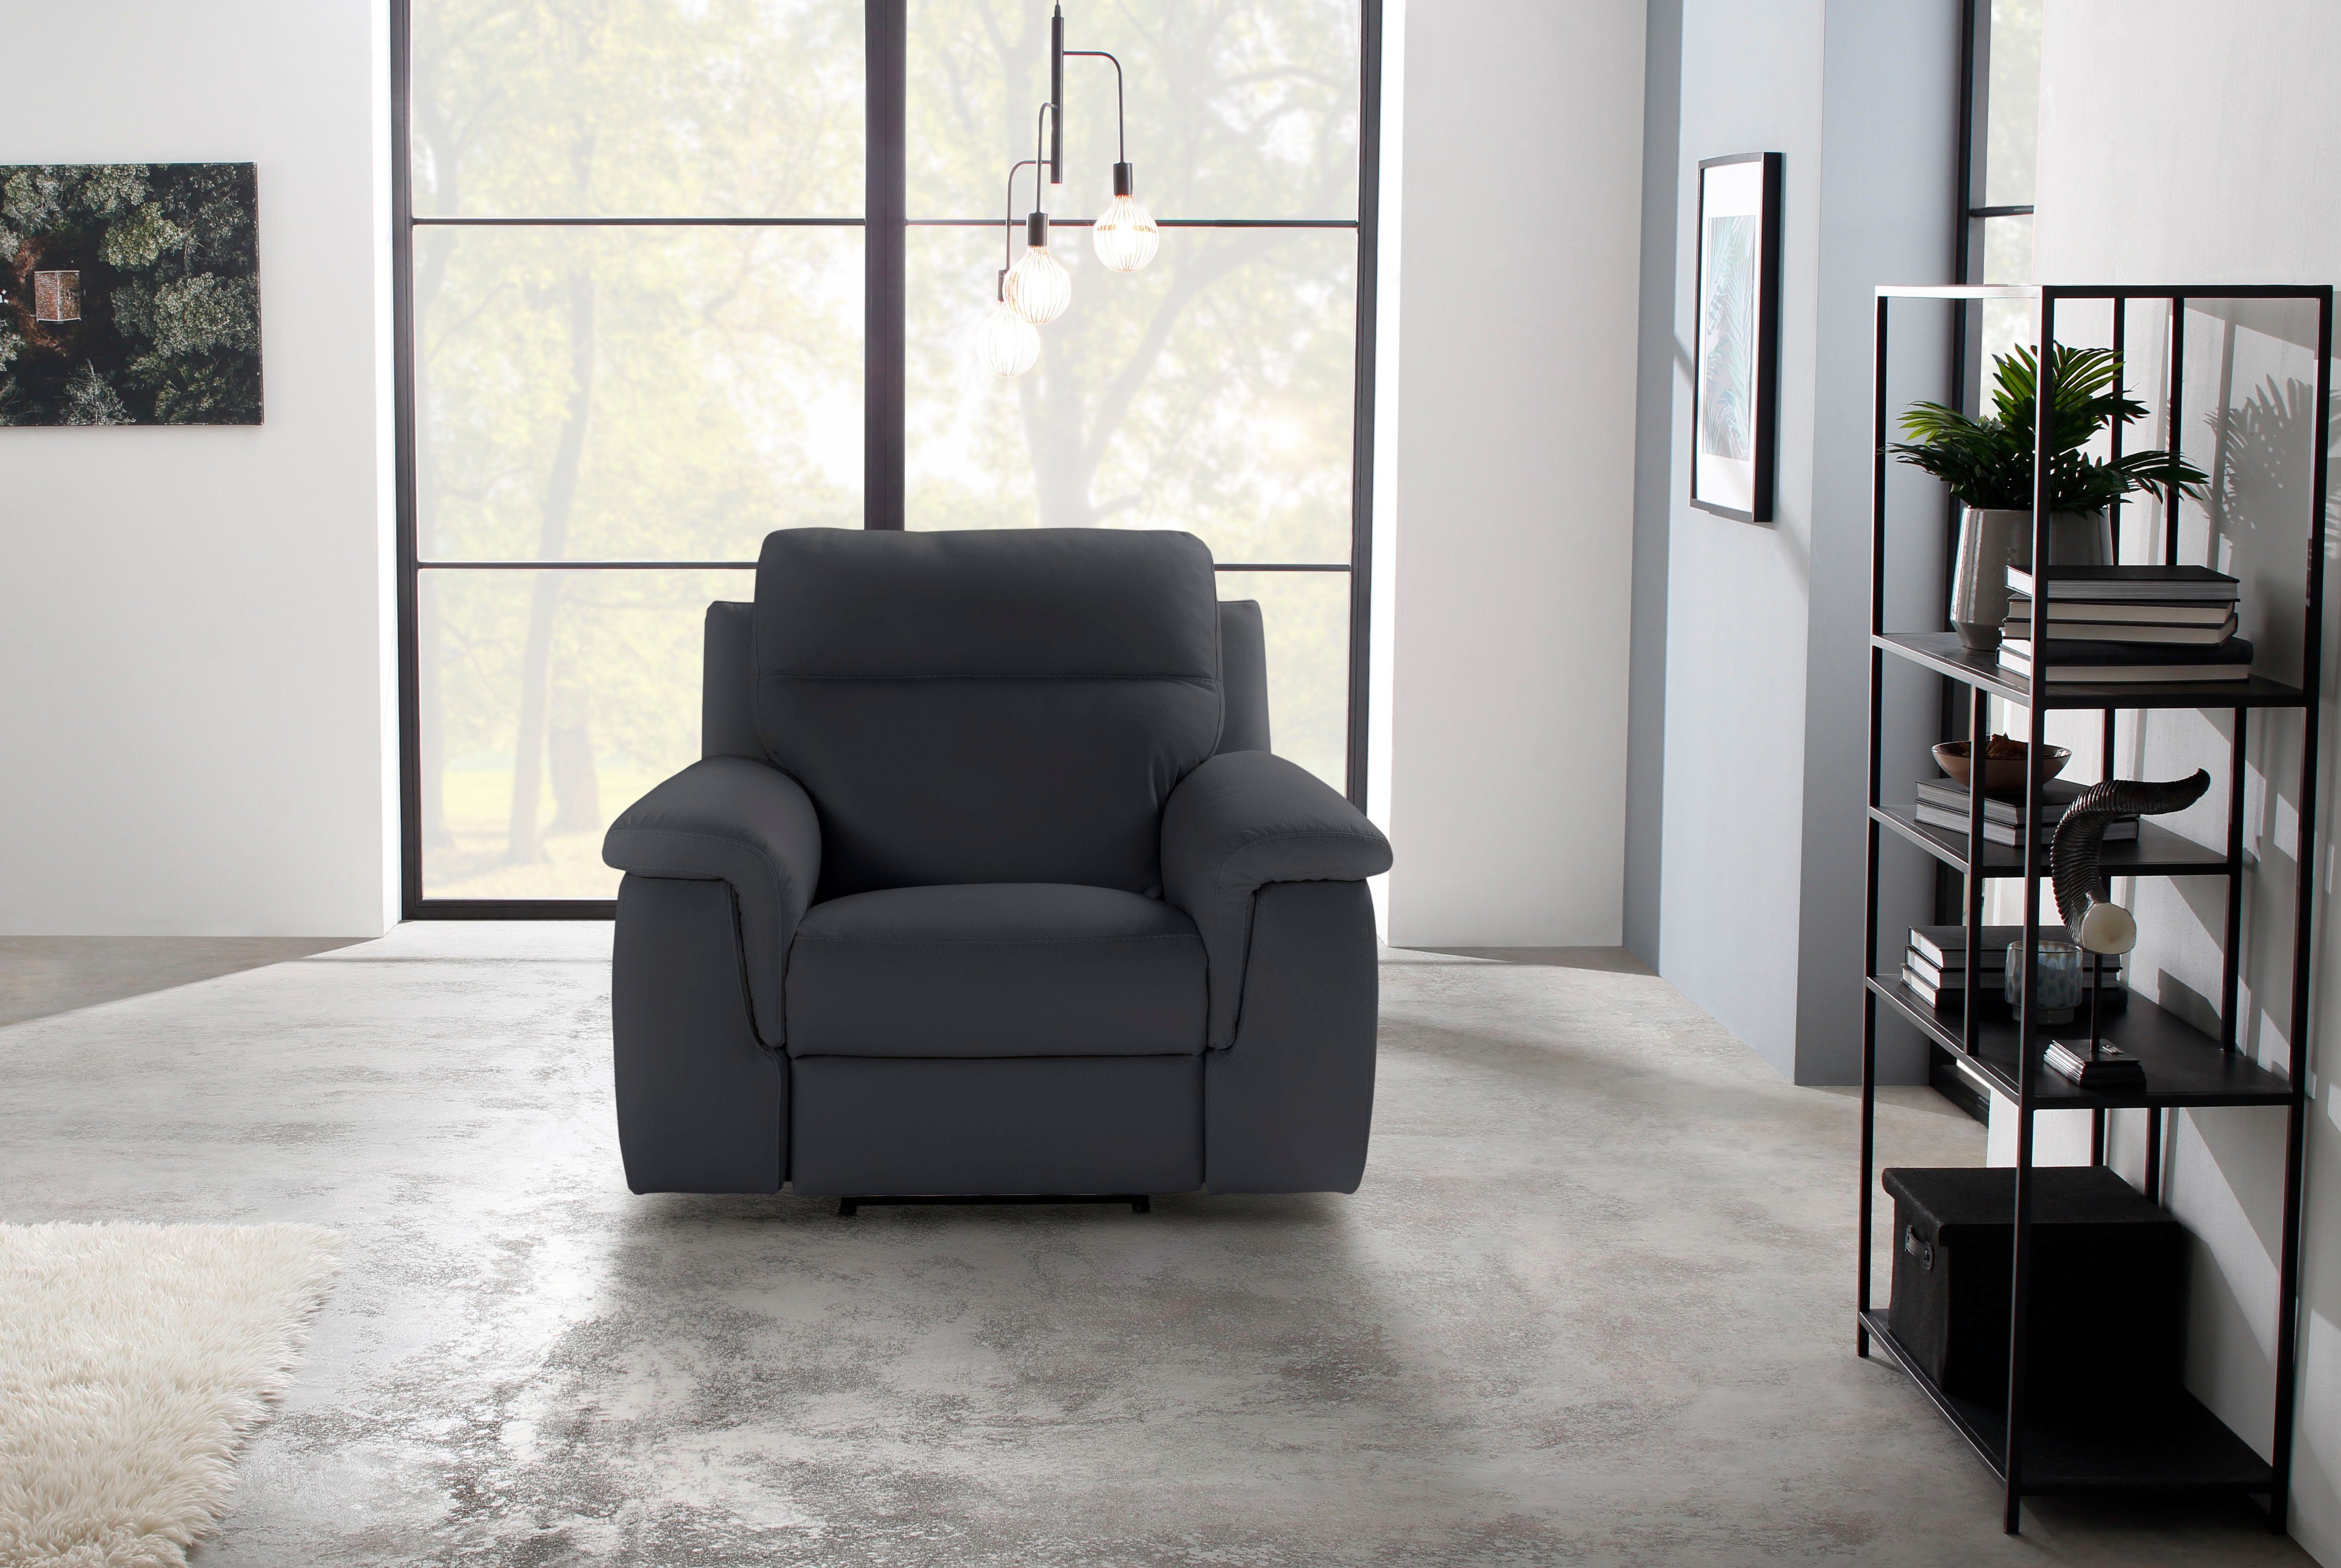 Relaxfunktion, inklusive mit 115 wahlweise cm Sessel Home Fußstütze, Nicoletti Alan, Breite